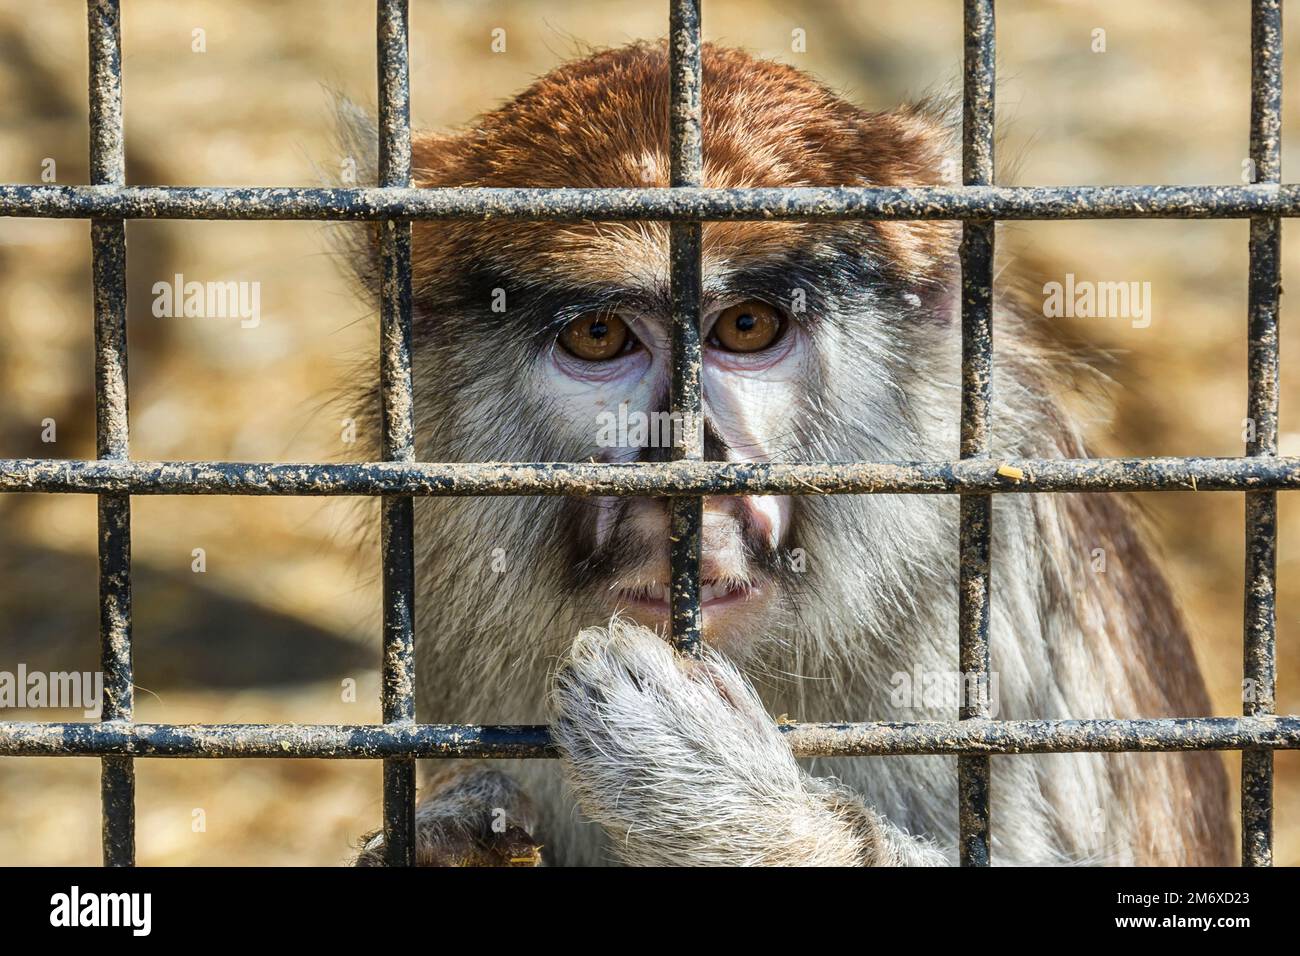 Wild animals. Monkey with a sad look sits behind a metal lattice Stock Photo